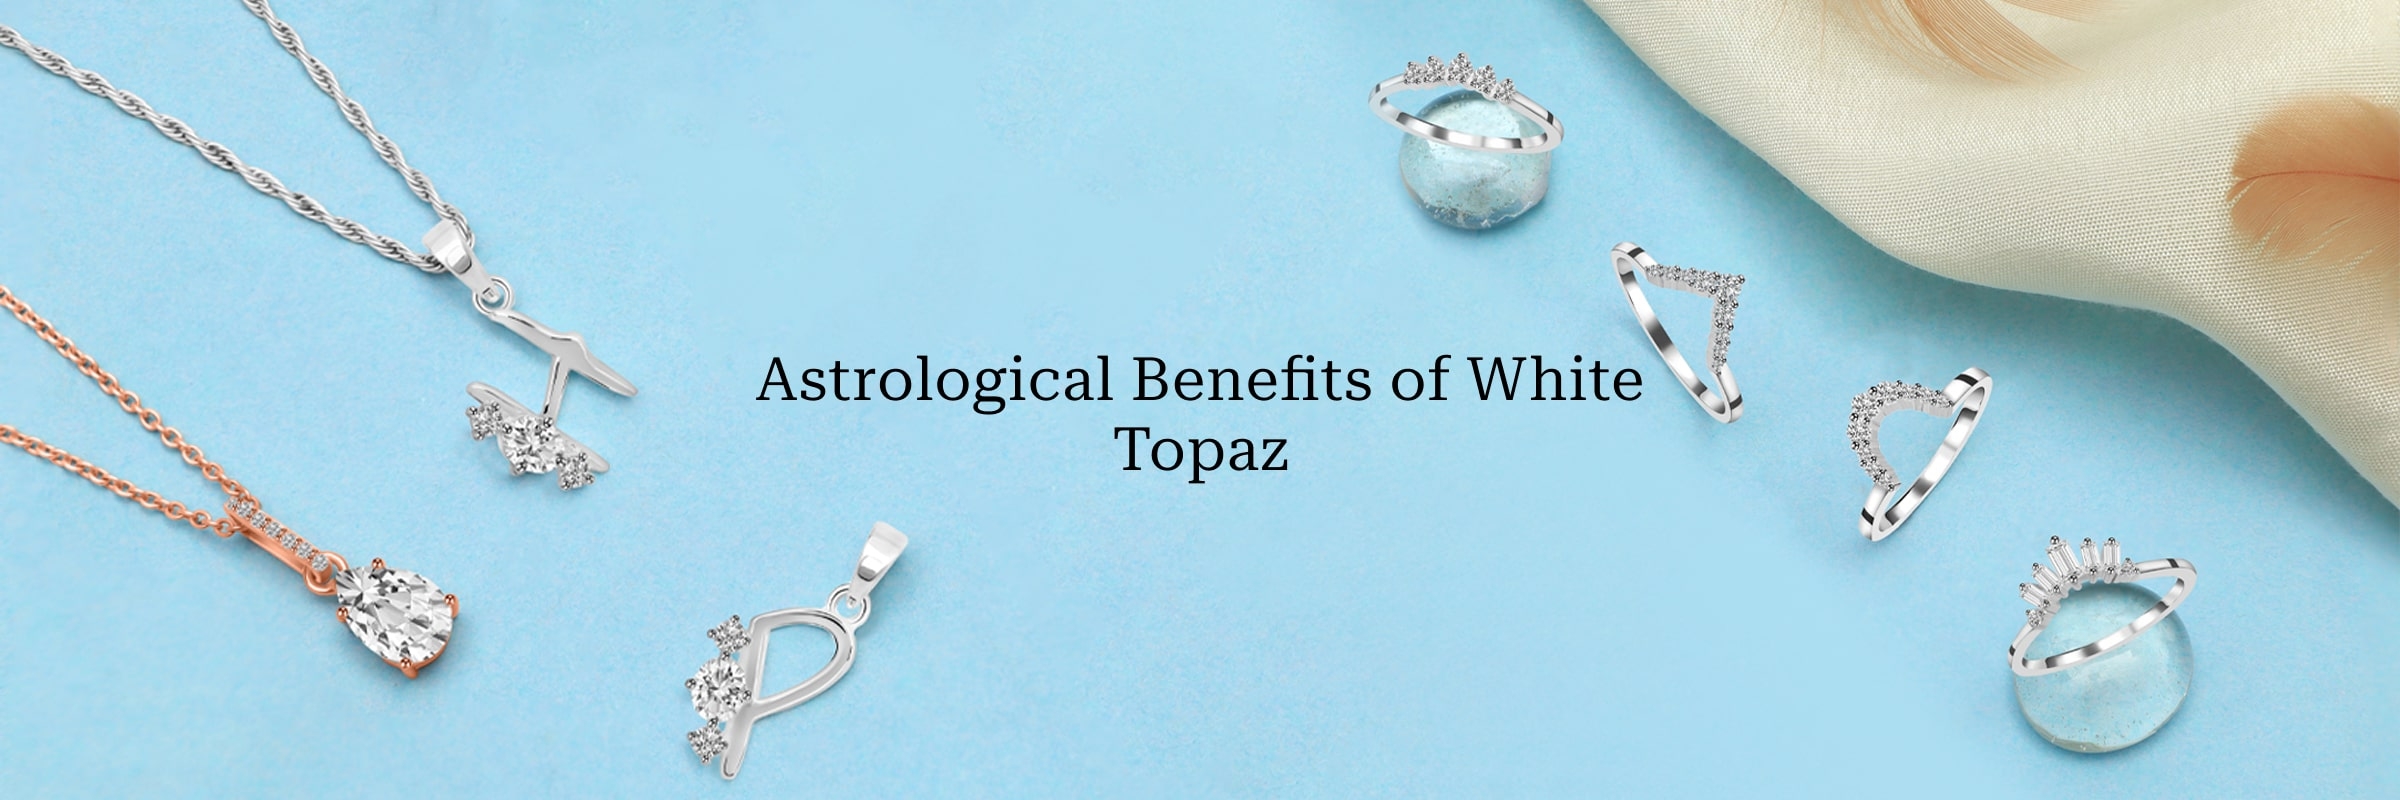 White Topaz Benefits in Astrology